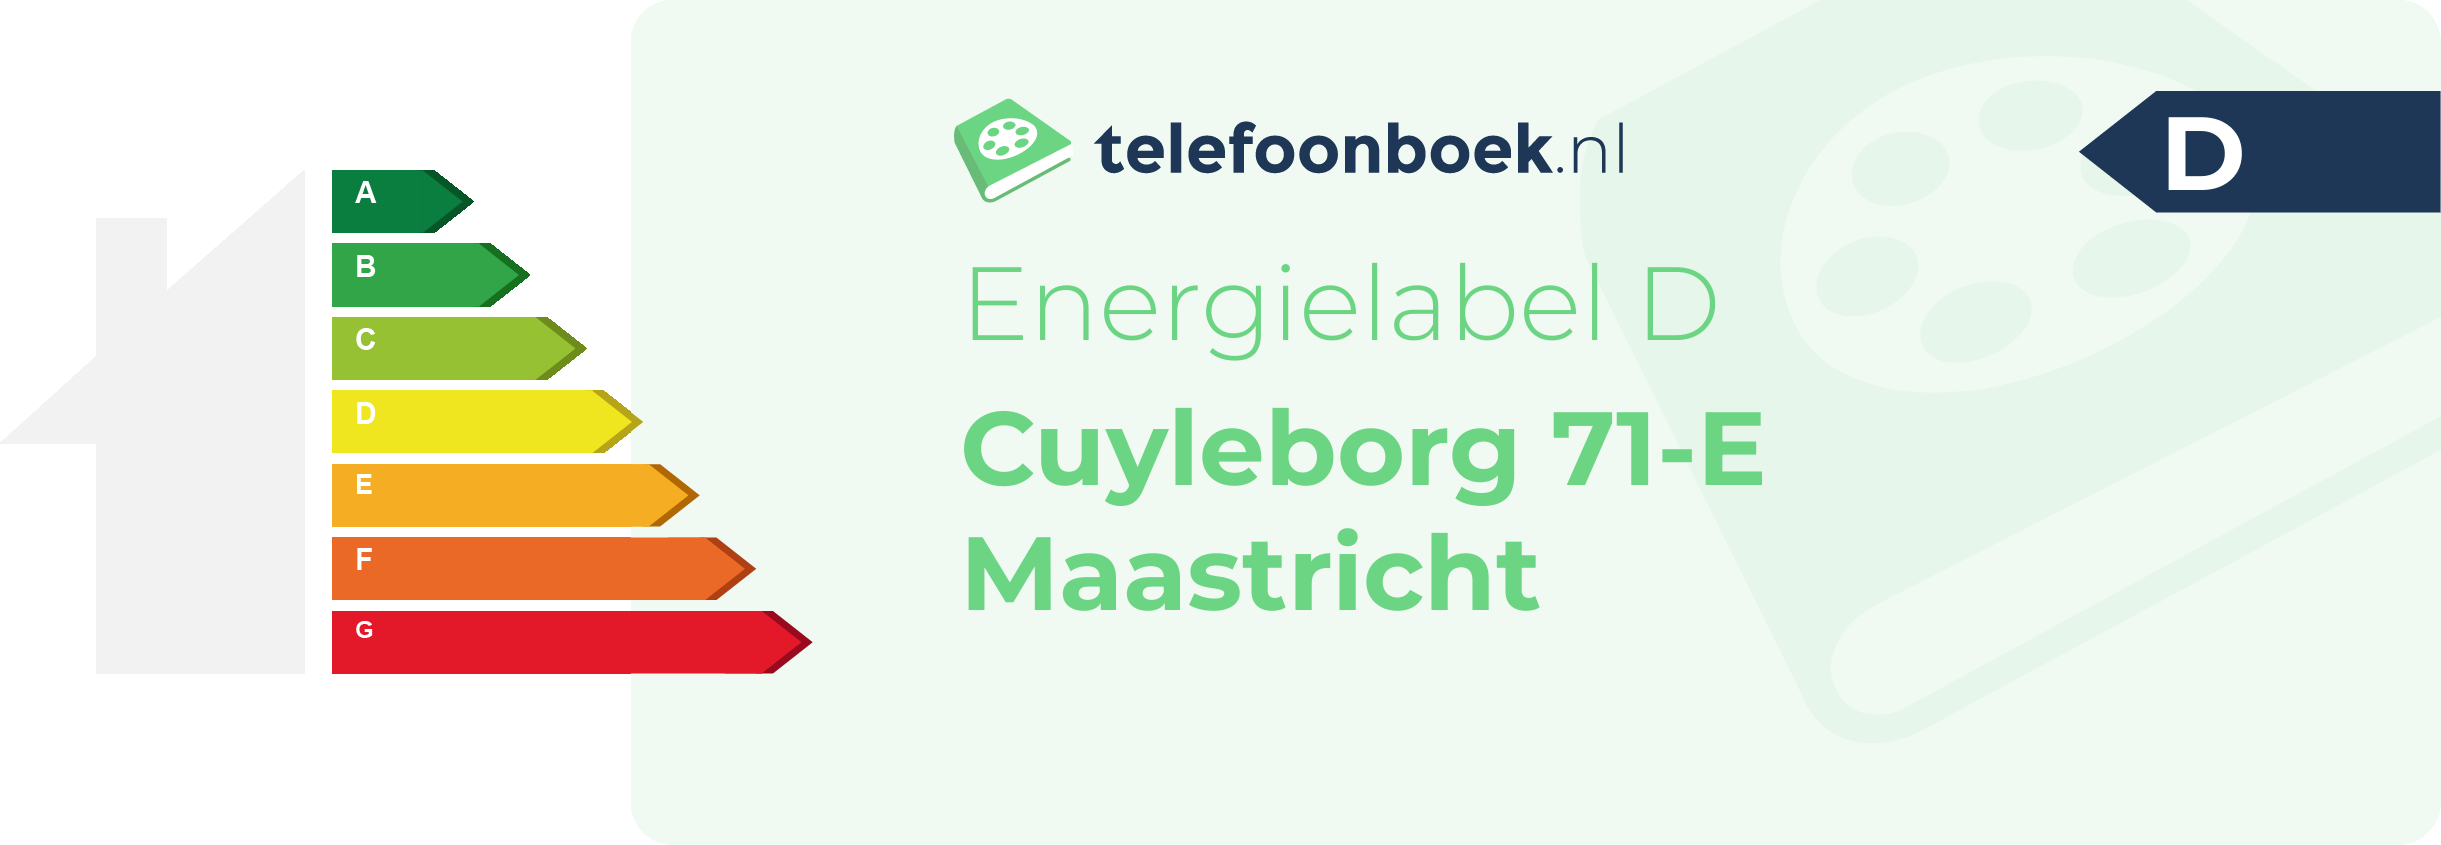 Energielabel Cuyleborg 71-E Maastricht